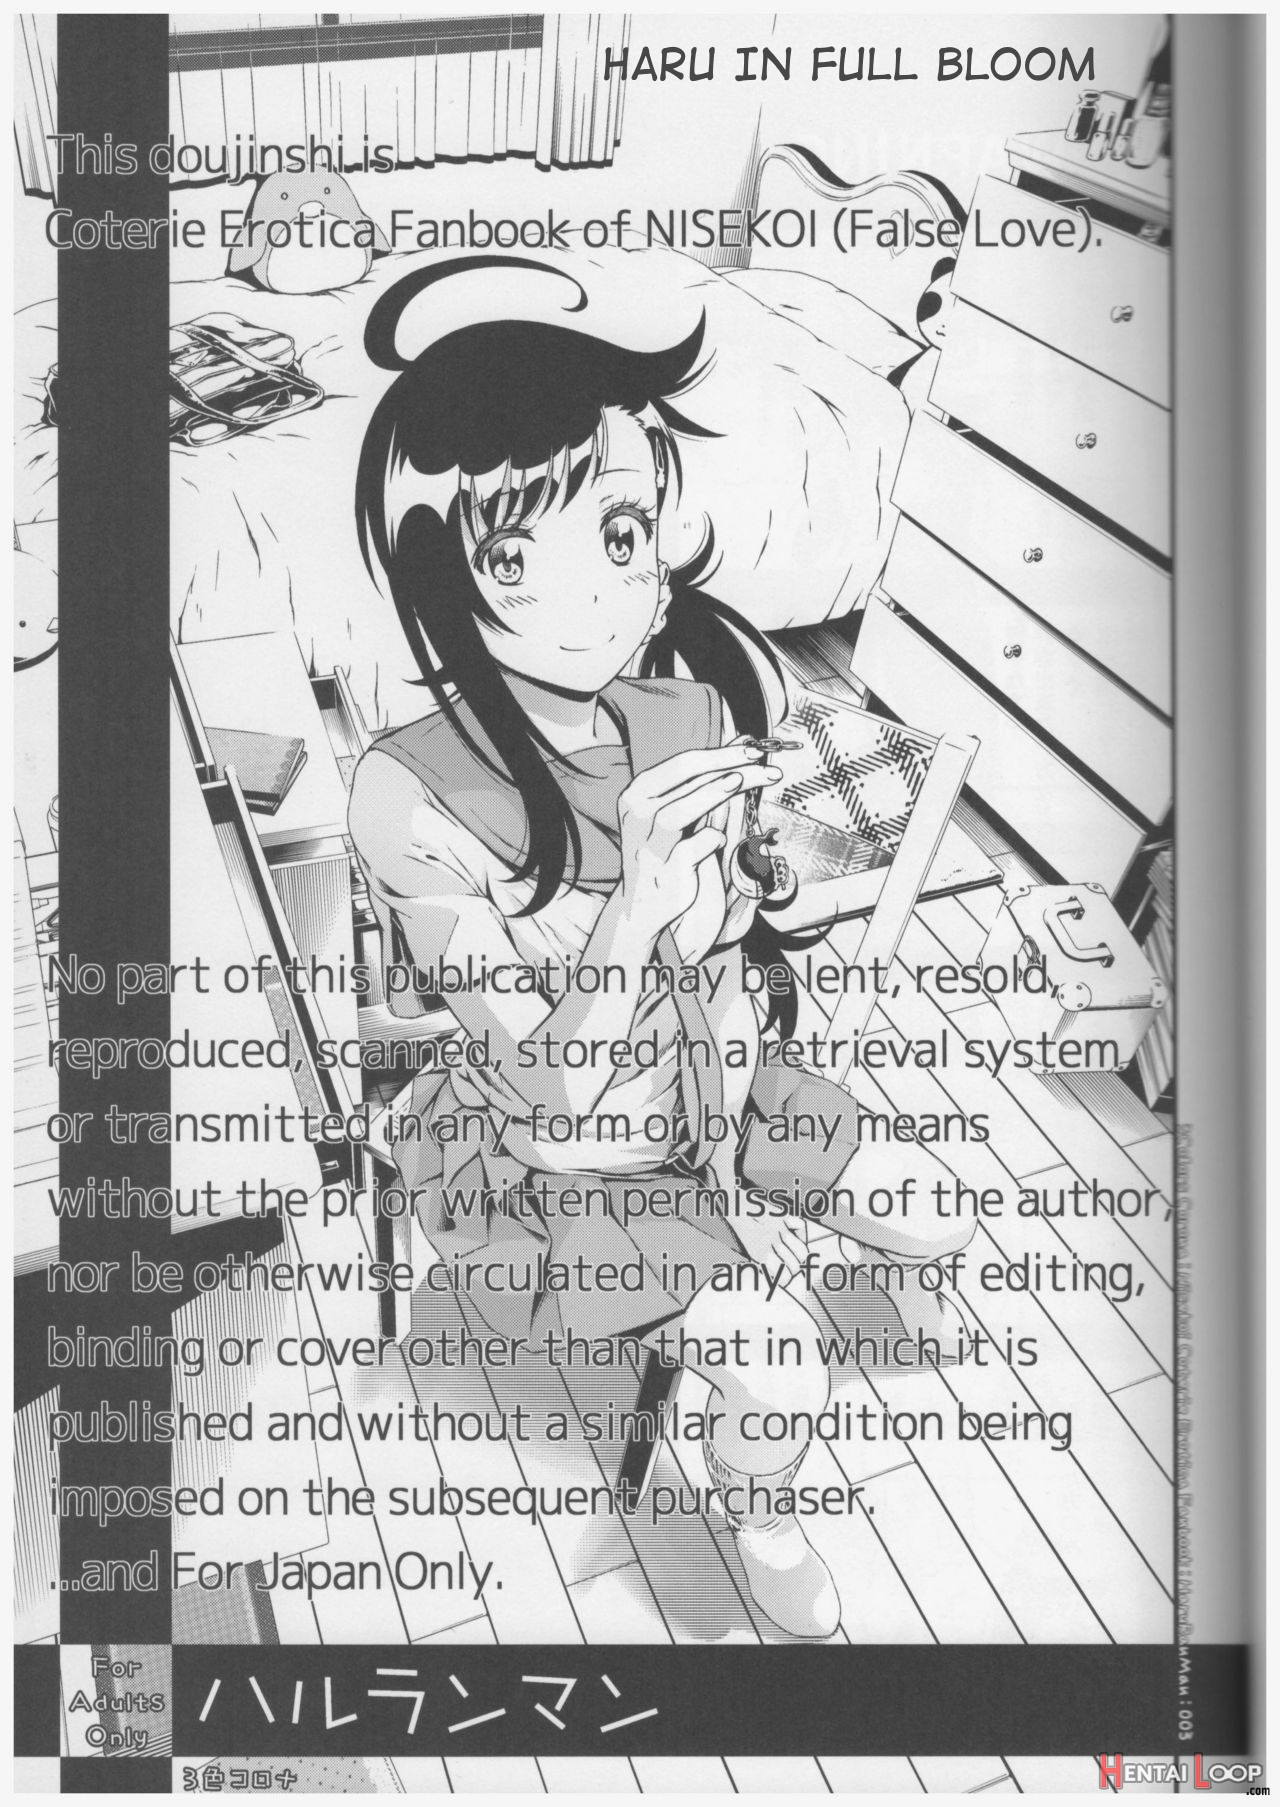 Haru In Full Bloom page 2